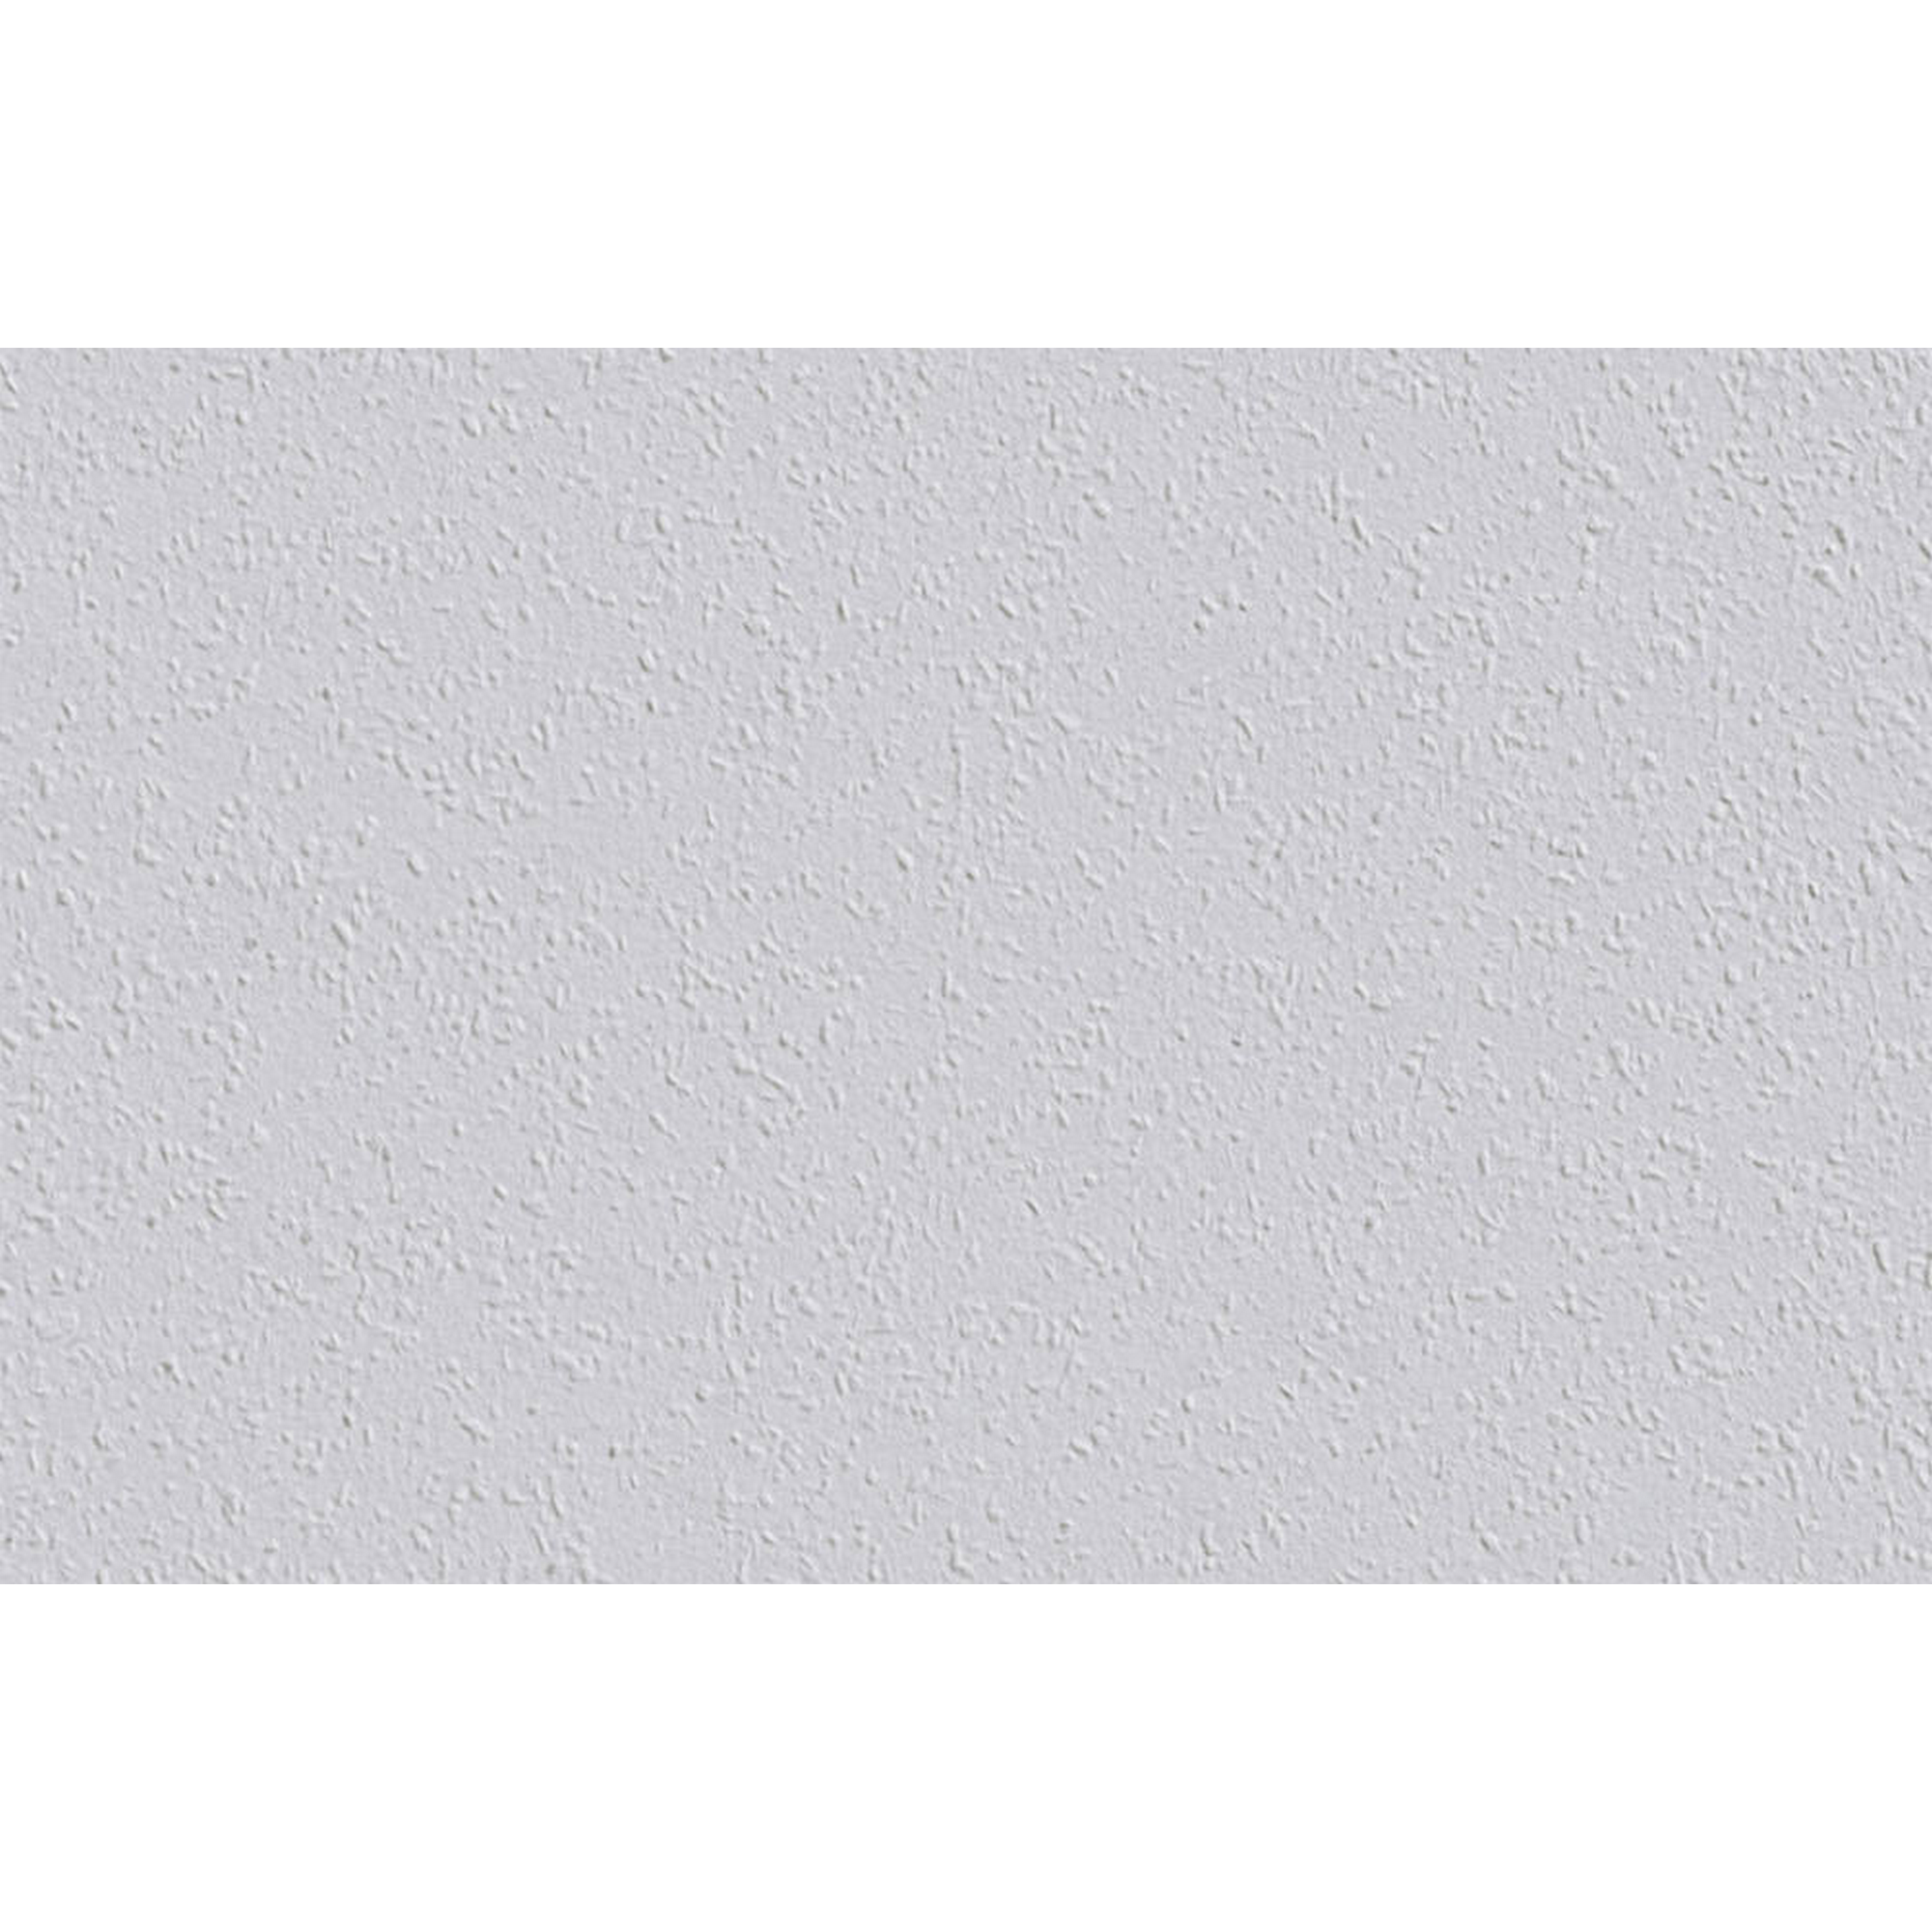 Vliestapete 'Variovlies Style' weiß 0,75 x 20 m + product picture